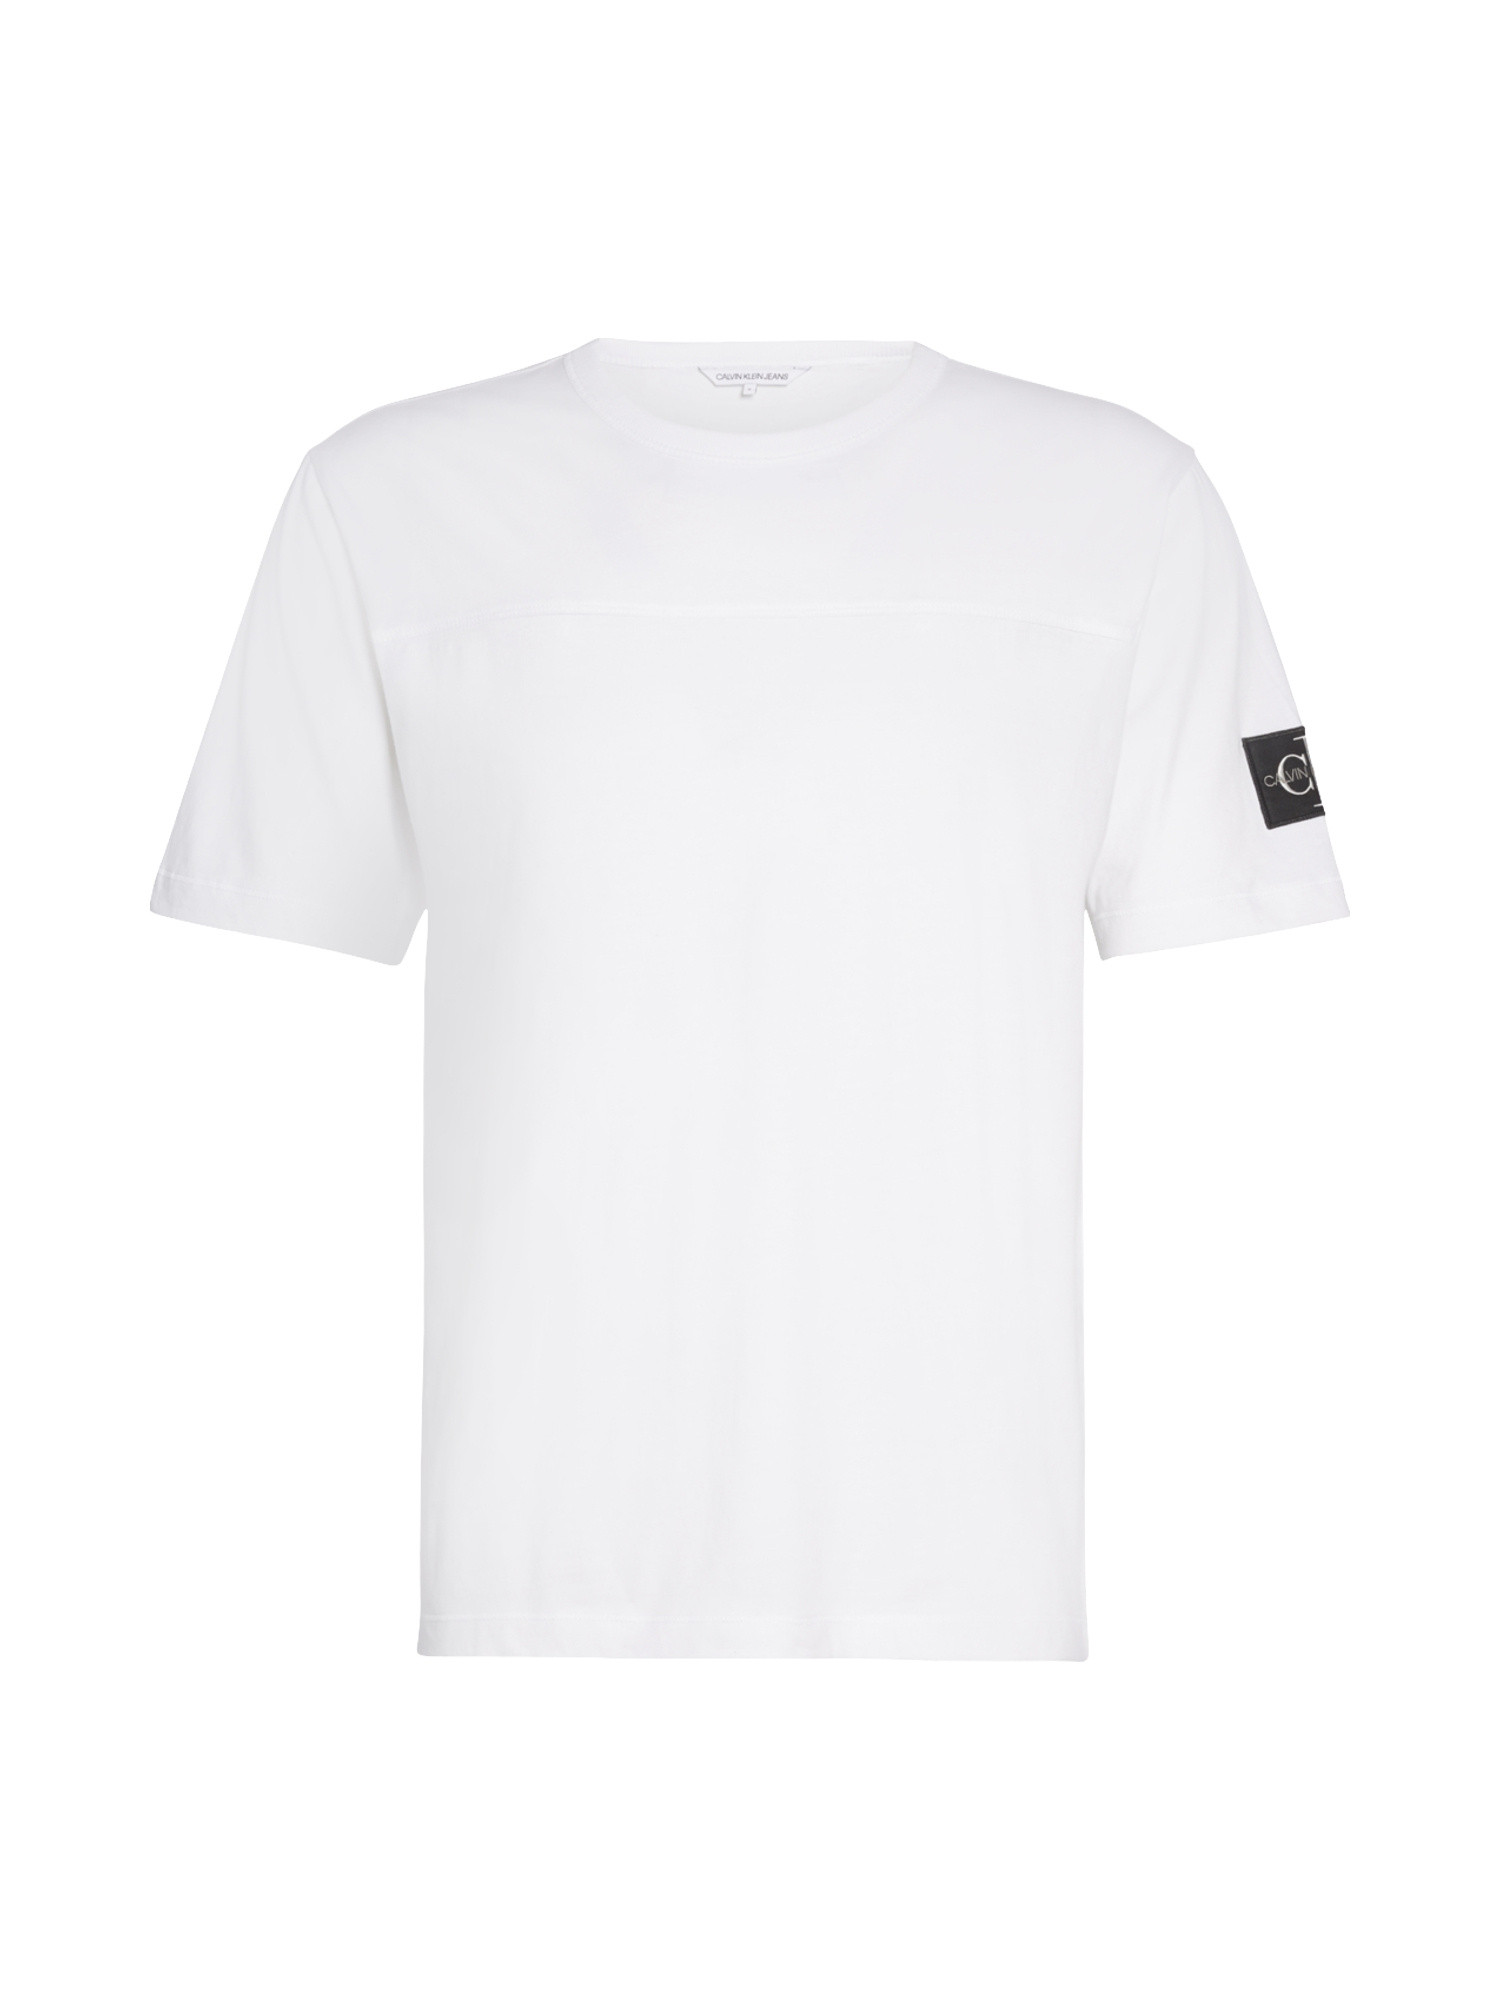 T-shirt with logo, White, large image number 0